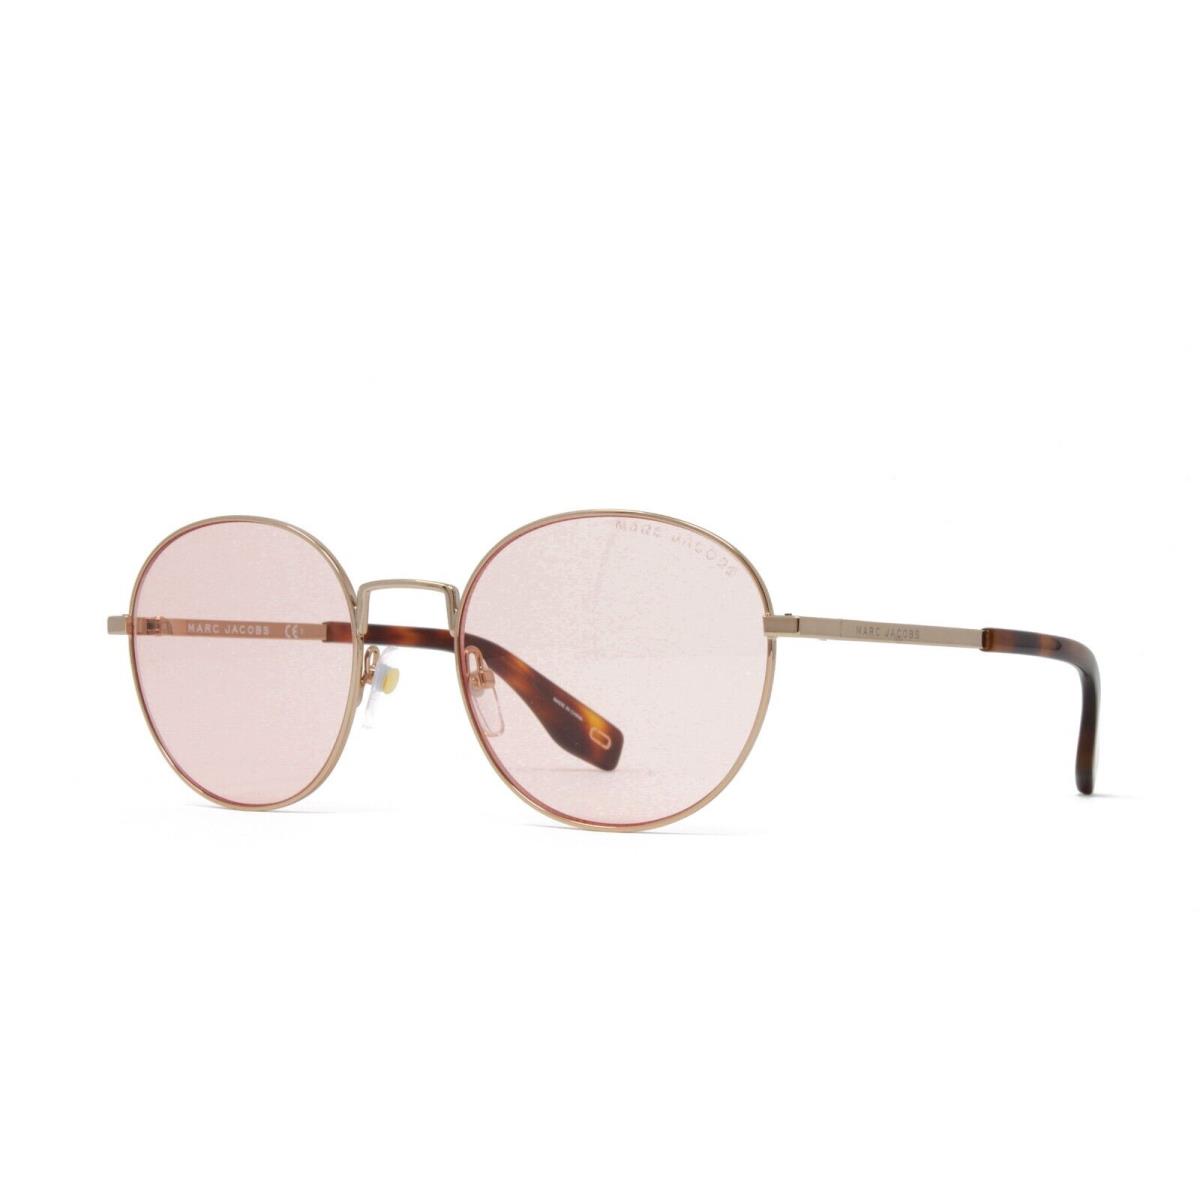 Marc Jacobs Round Men`s Sunglasses MJ272S Color 1N5 Coral Size 53mm